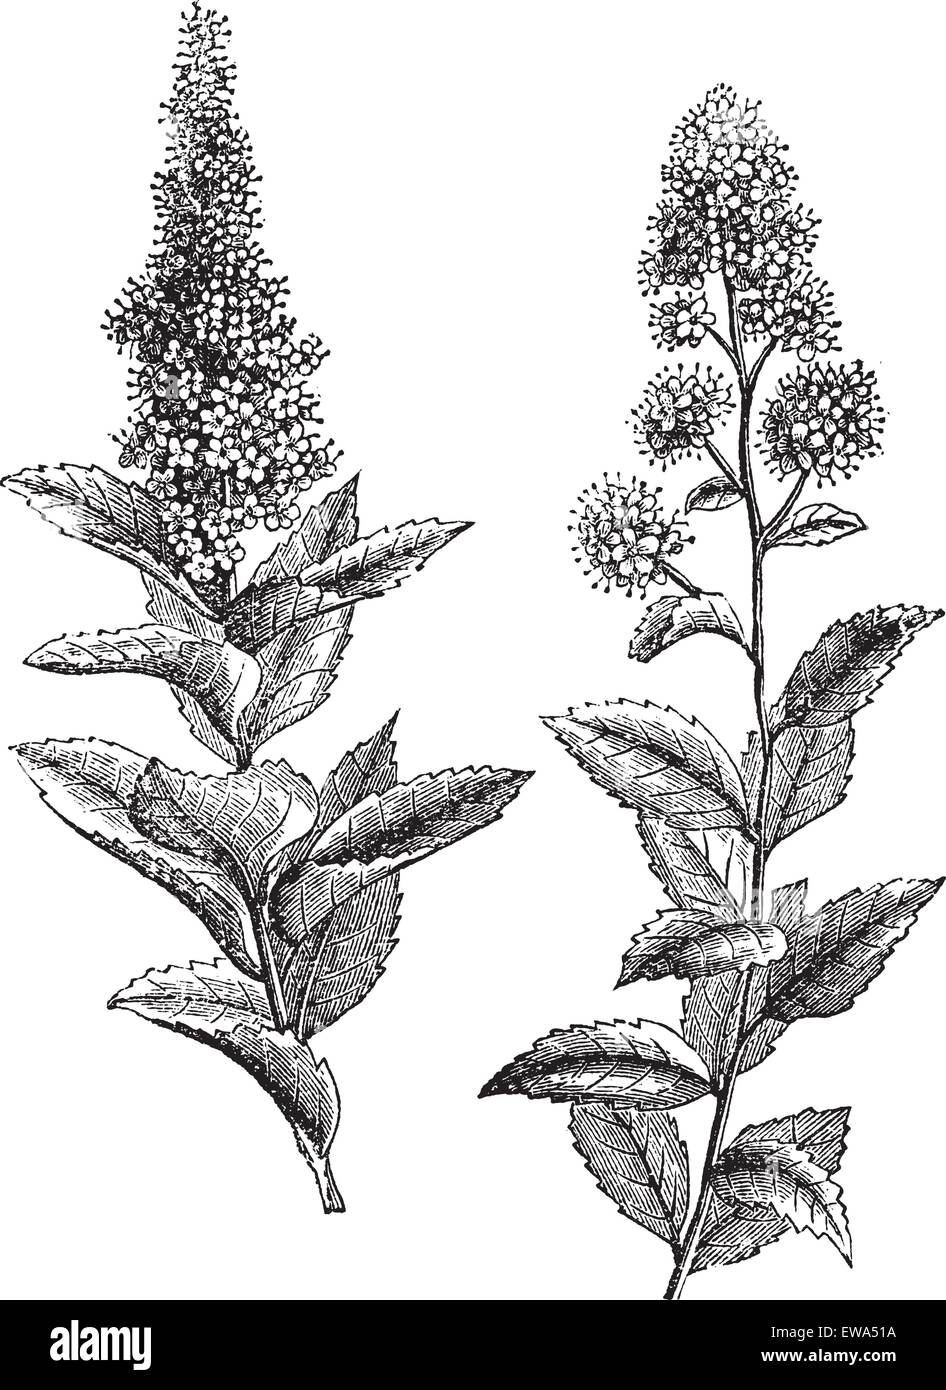 Spiraea salicifolia and Steeplebush or Spiraea tomentosa or Hardhack, vintage engraving. Old engraved illustration of Spiraea salicifolia (1) and Steeplebush (2) isolated on a white background. Stock Vector